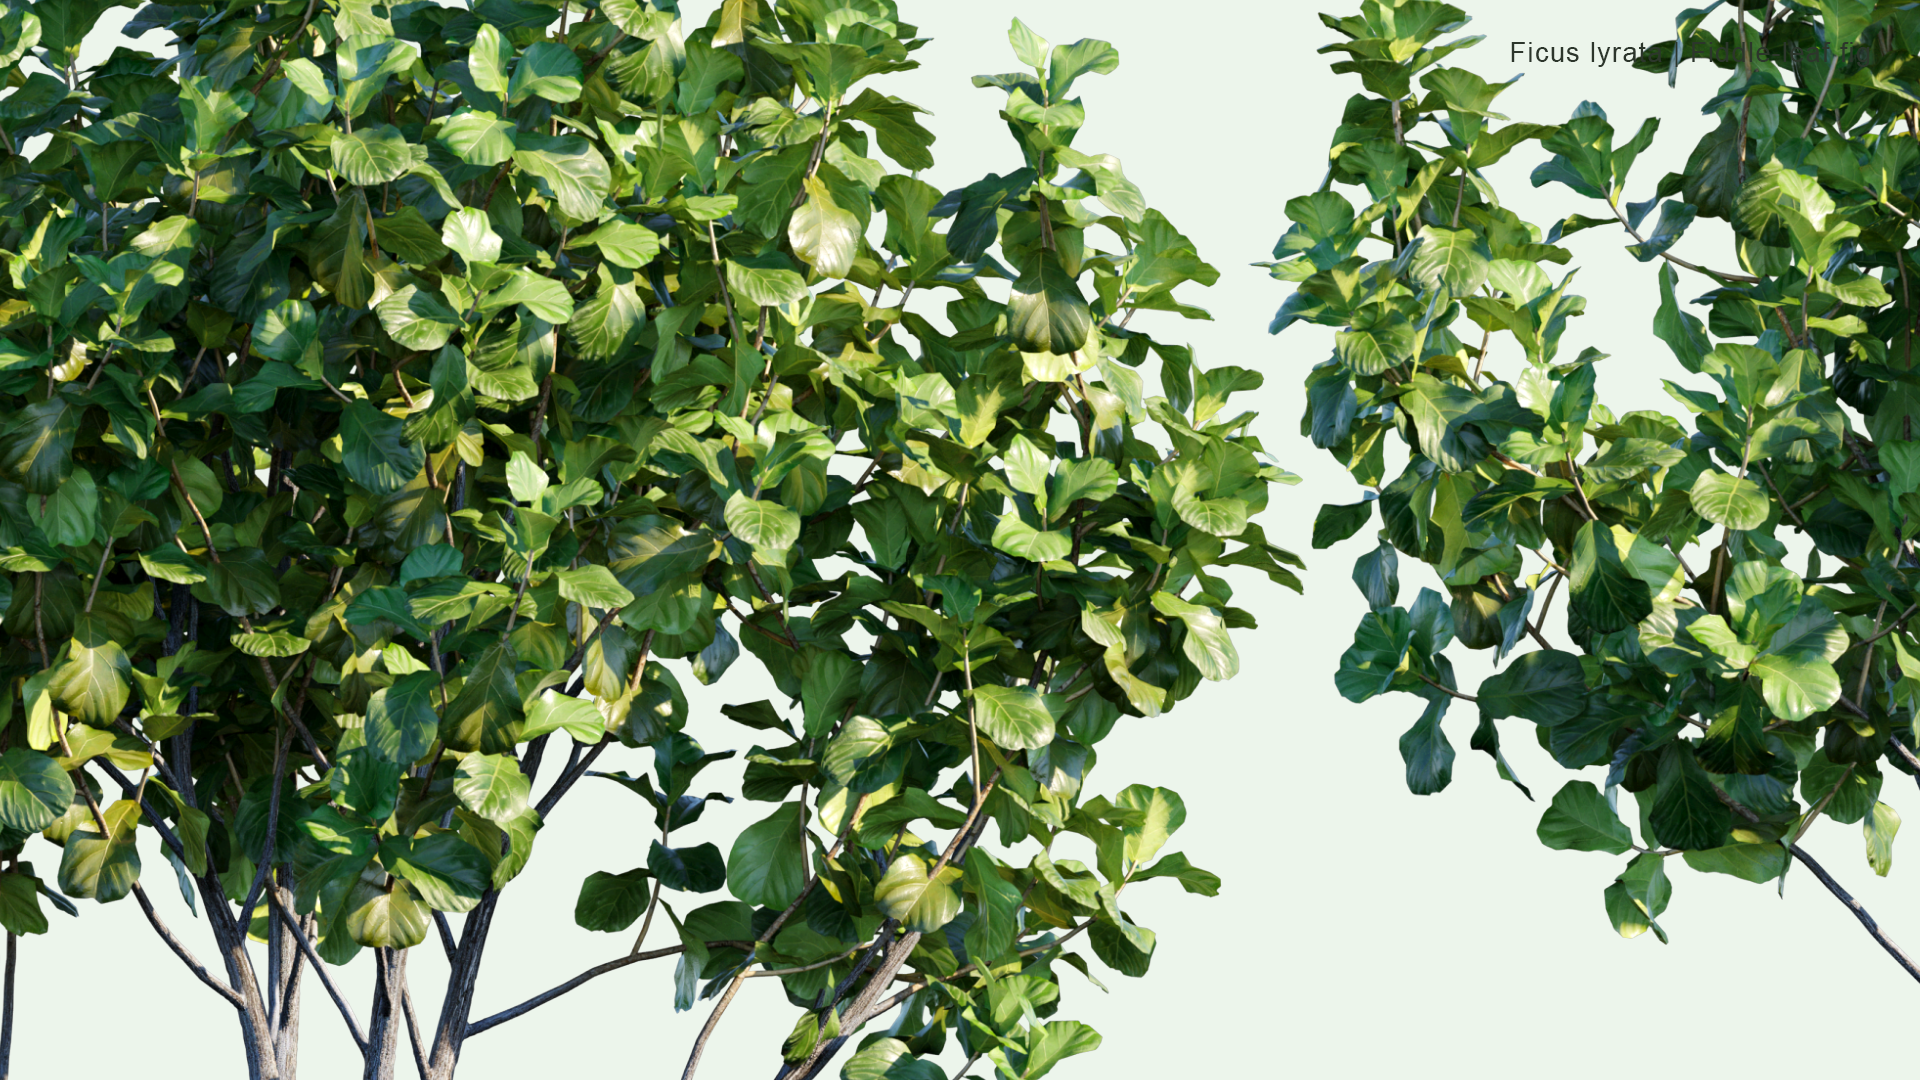 2D Ficus Lyrata - Fiddle-Leaf Fig